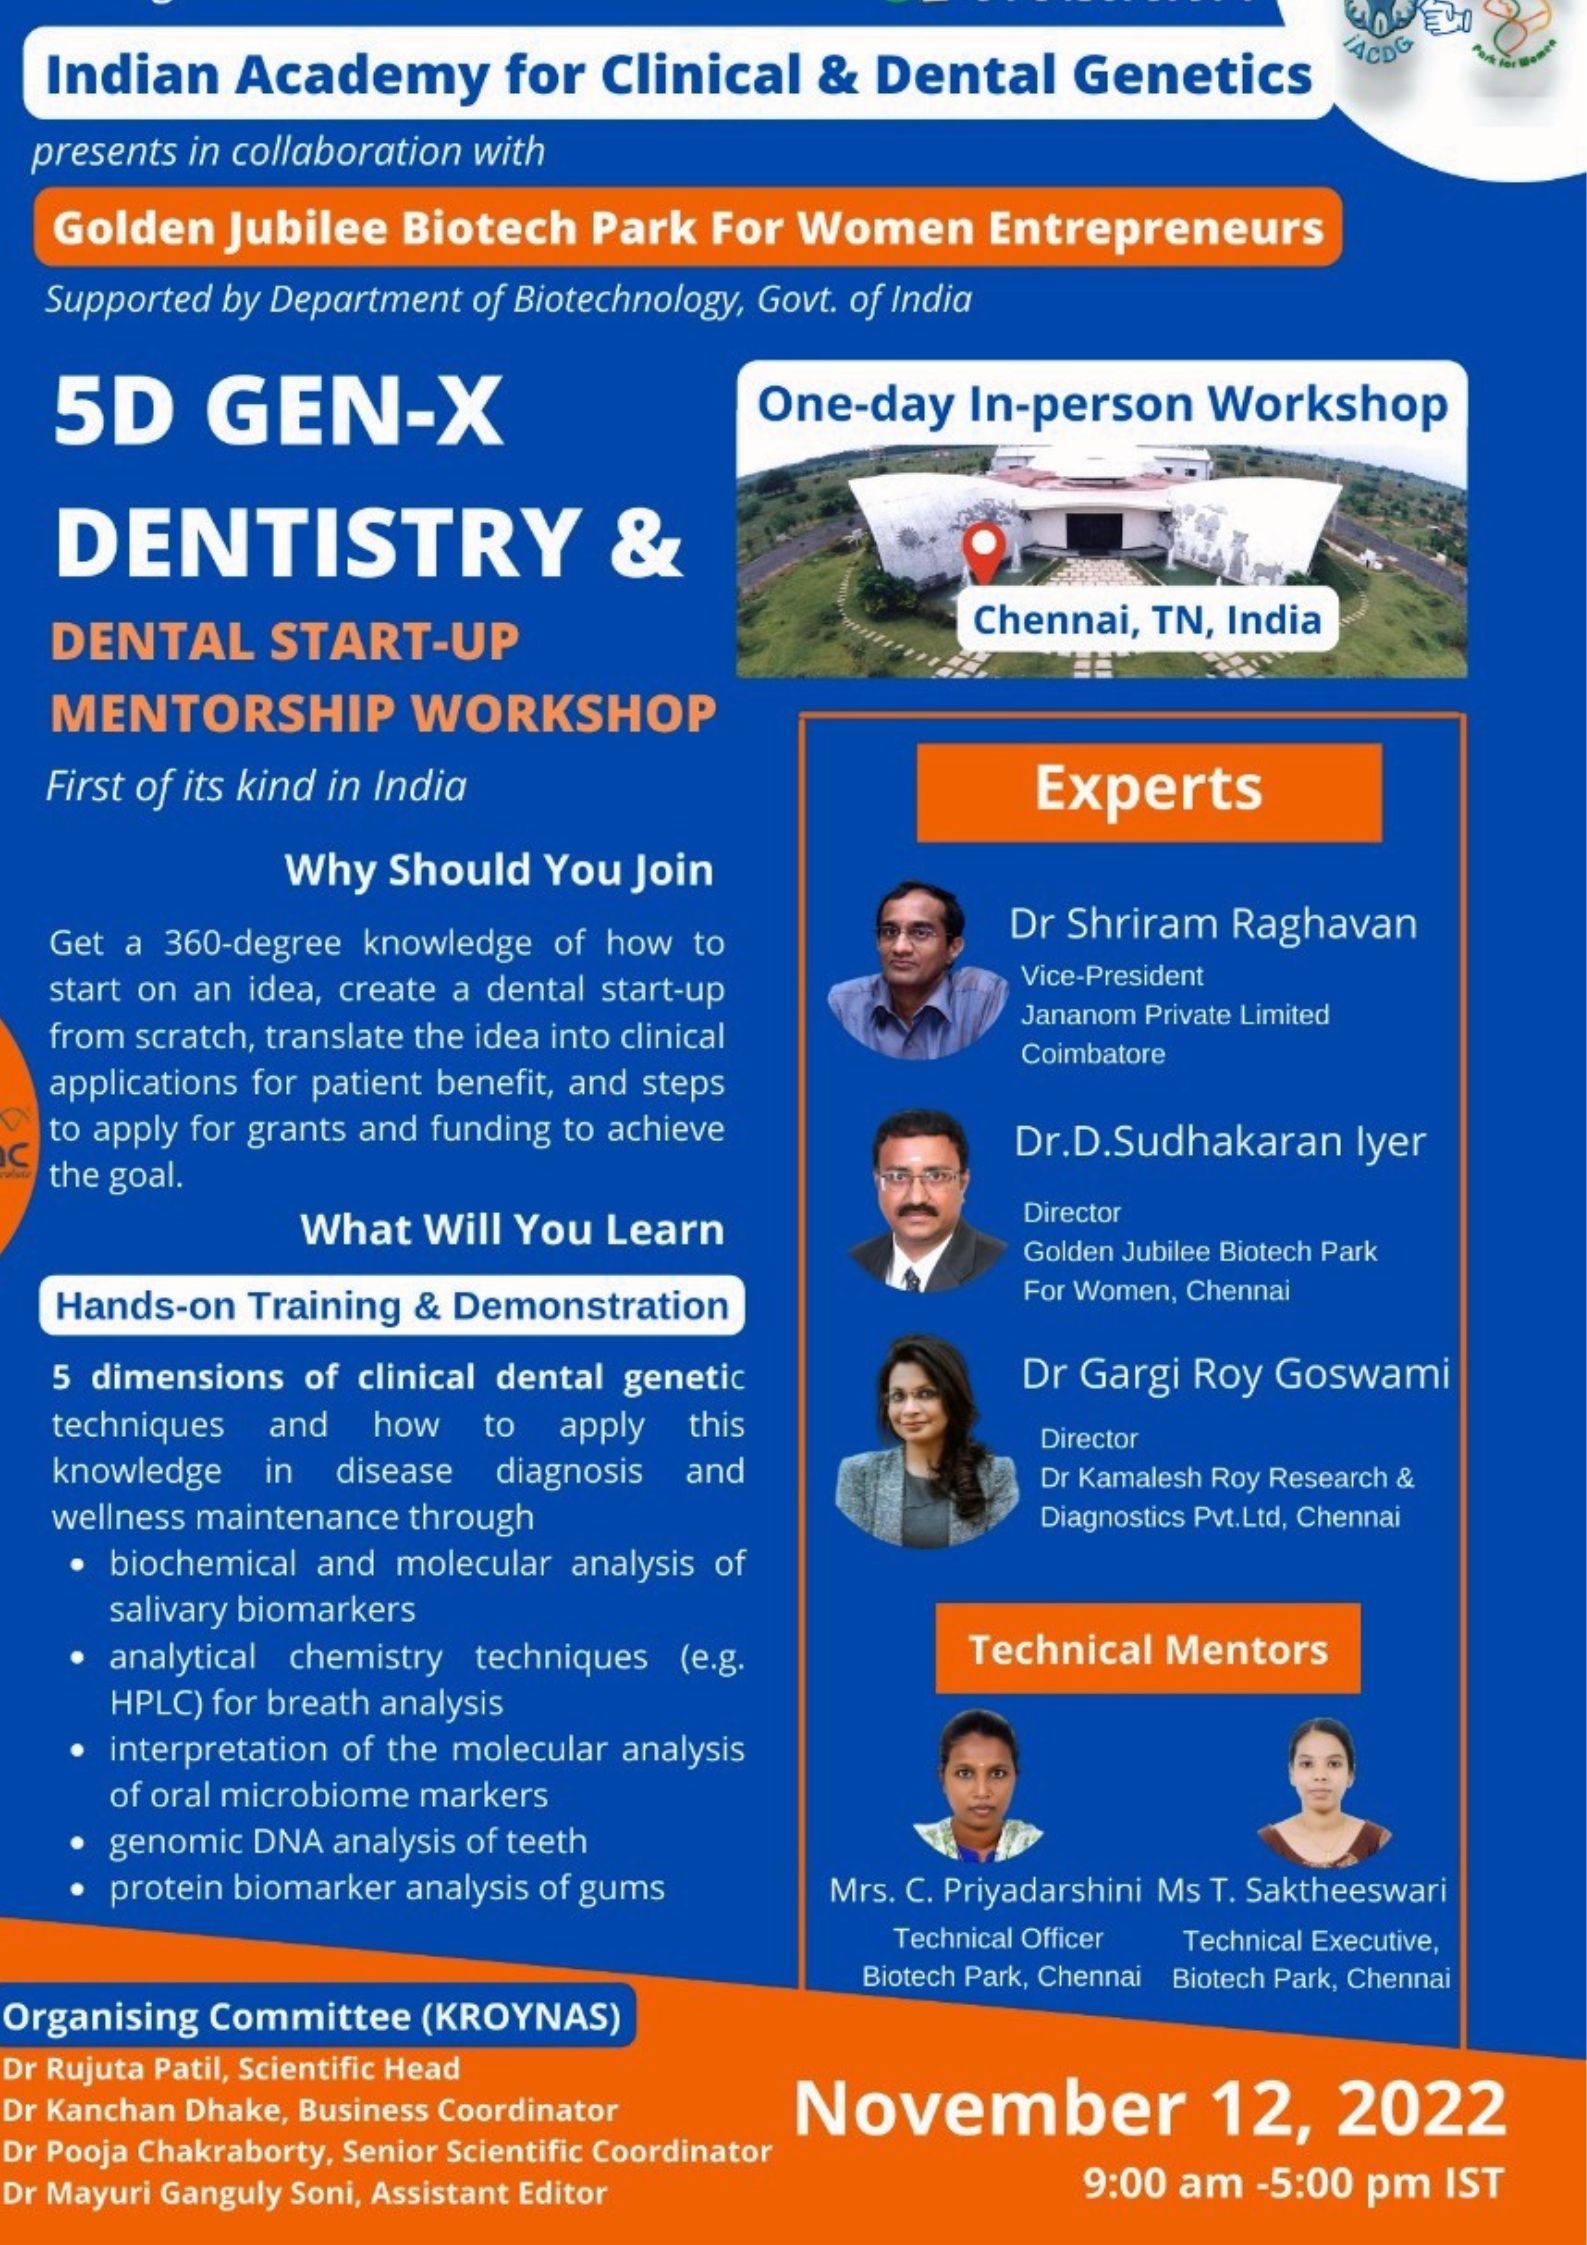 5D Gen X Dentistry & Dental Start-up Mentorship Workshop, Chennai, Tamil Nadu, India